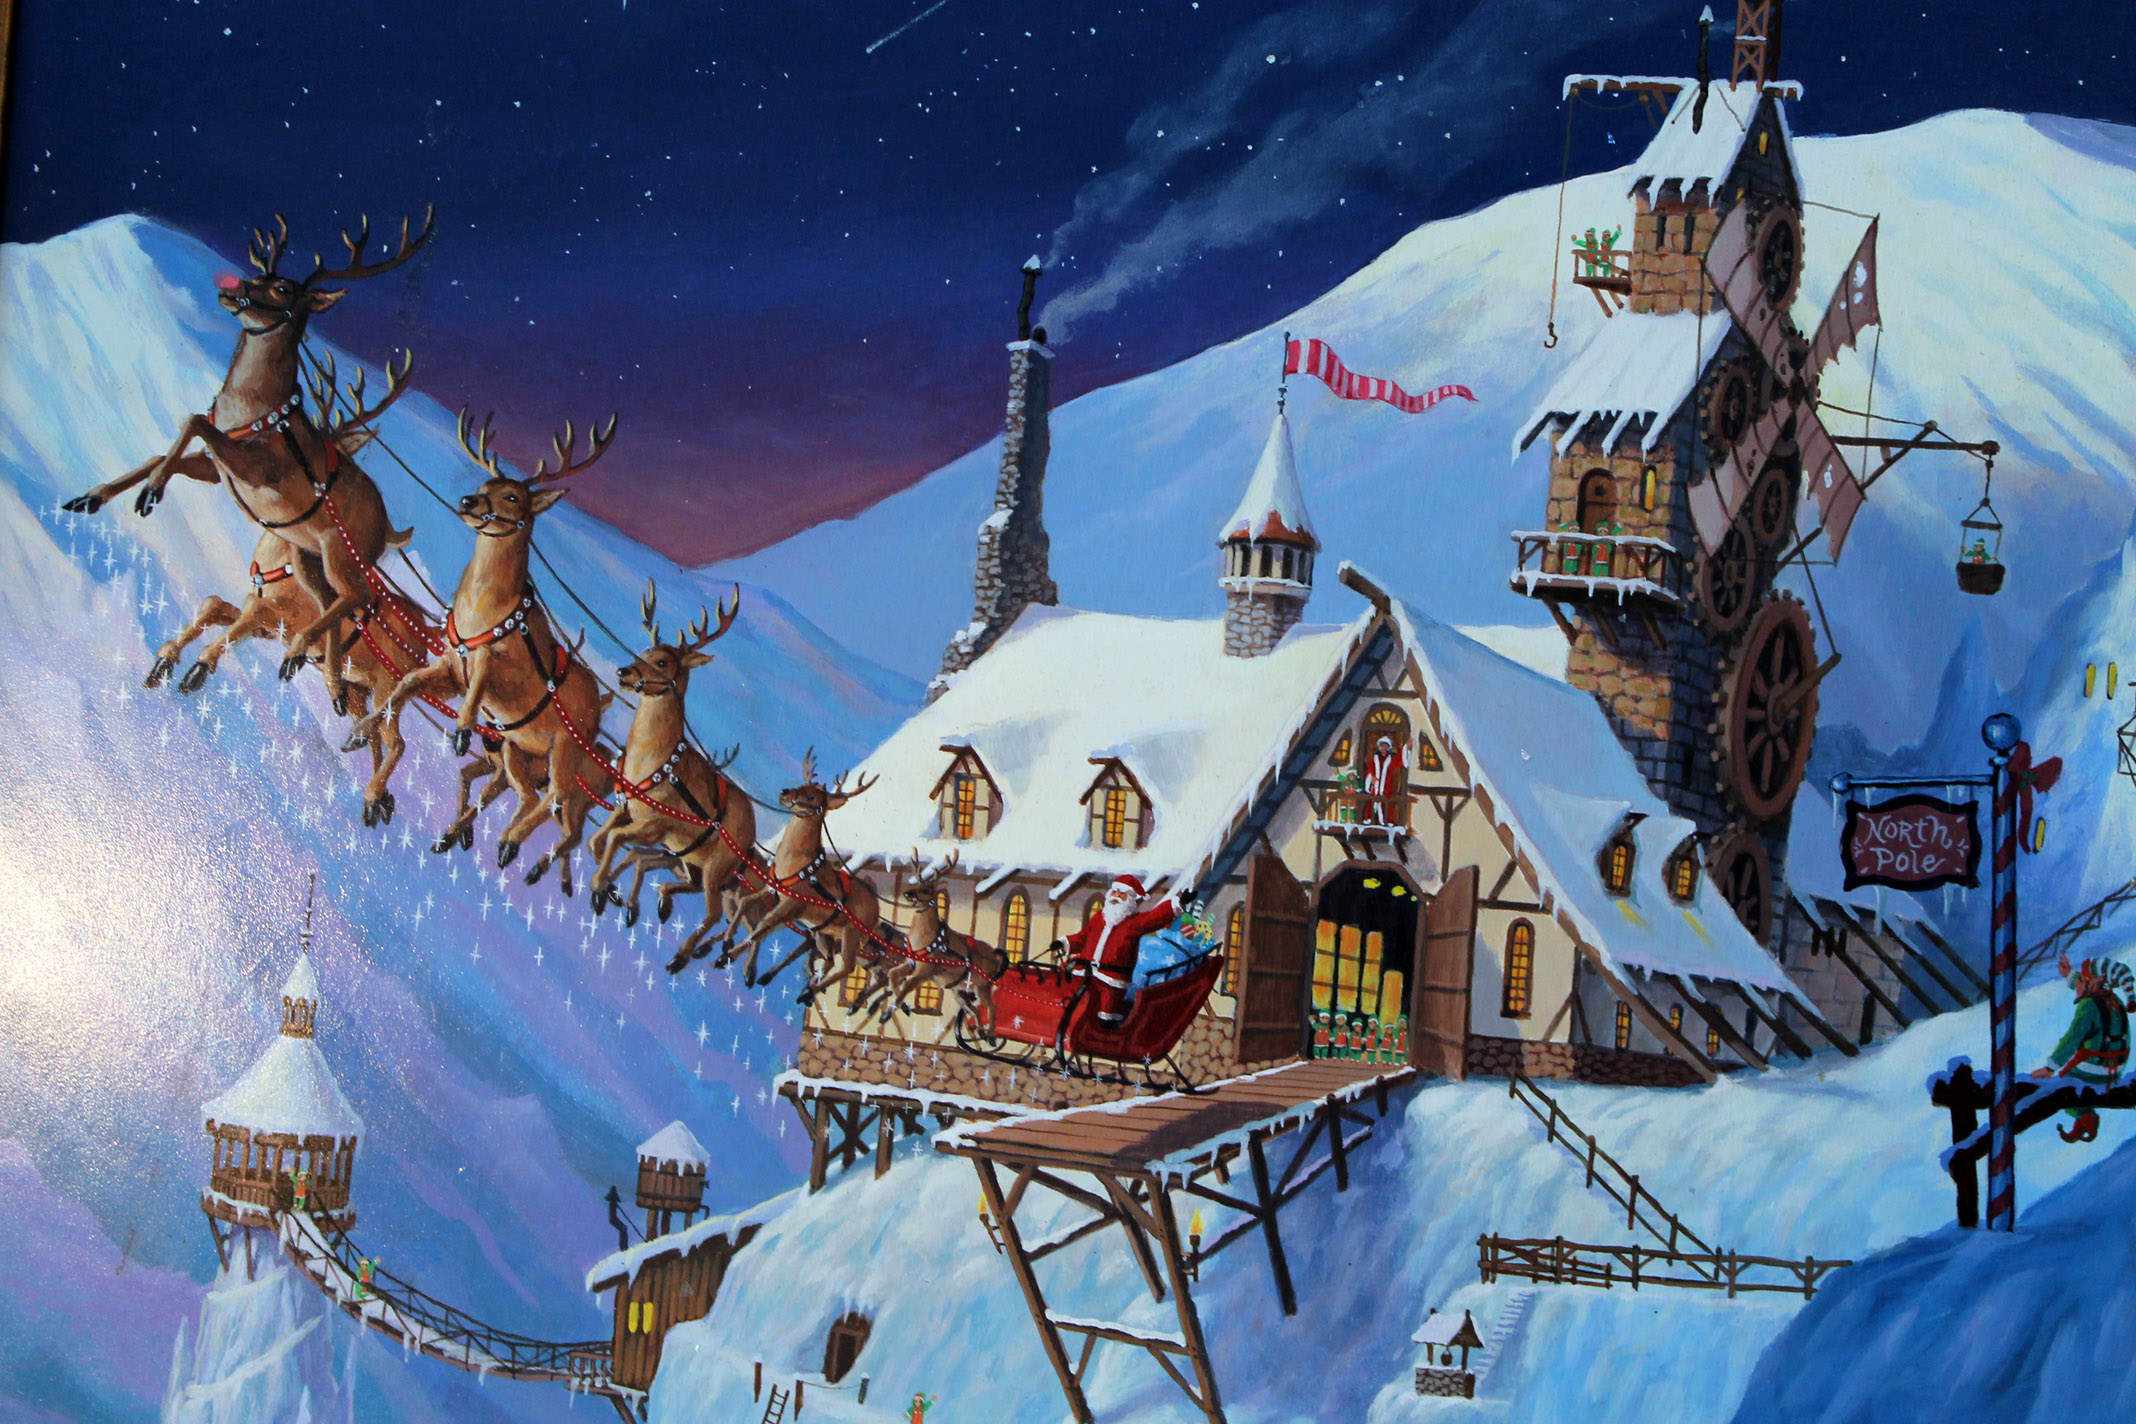 North Pole Christmas Background